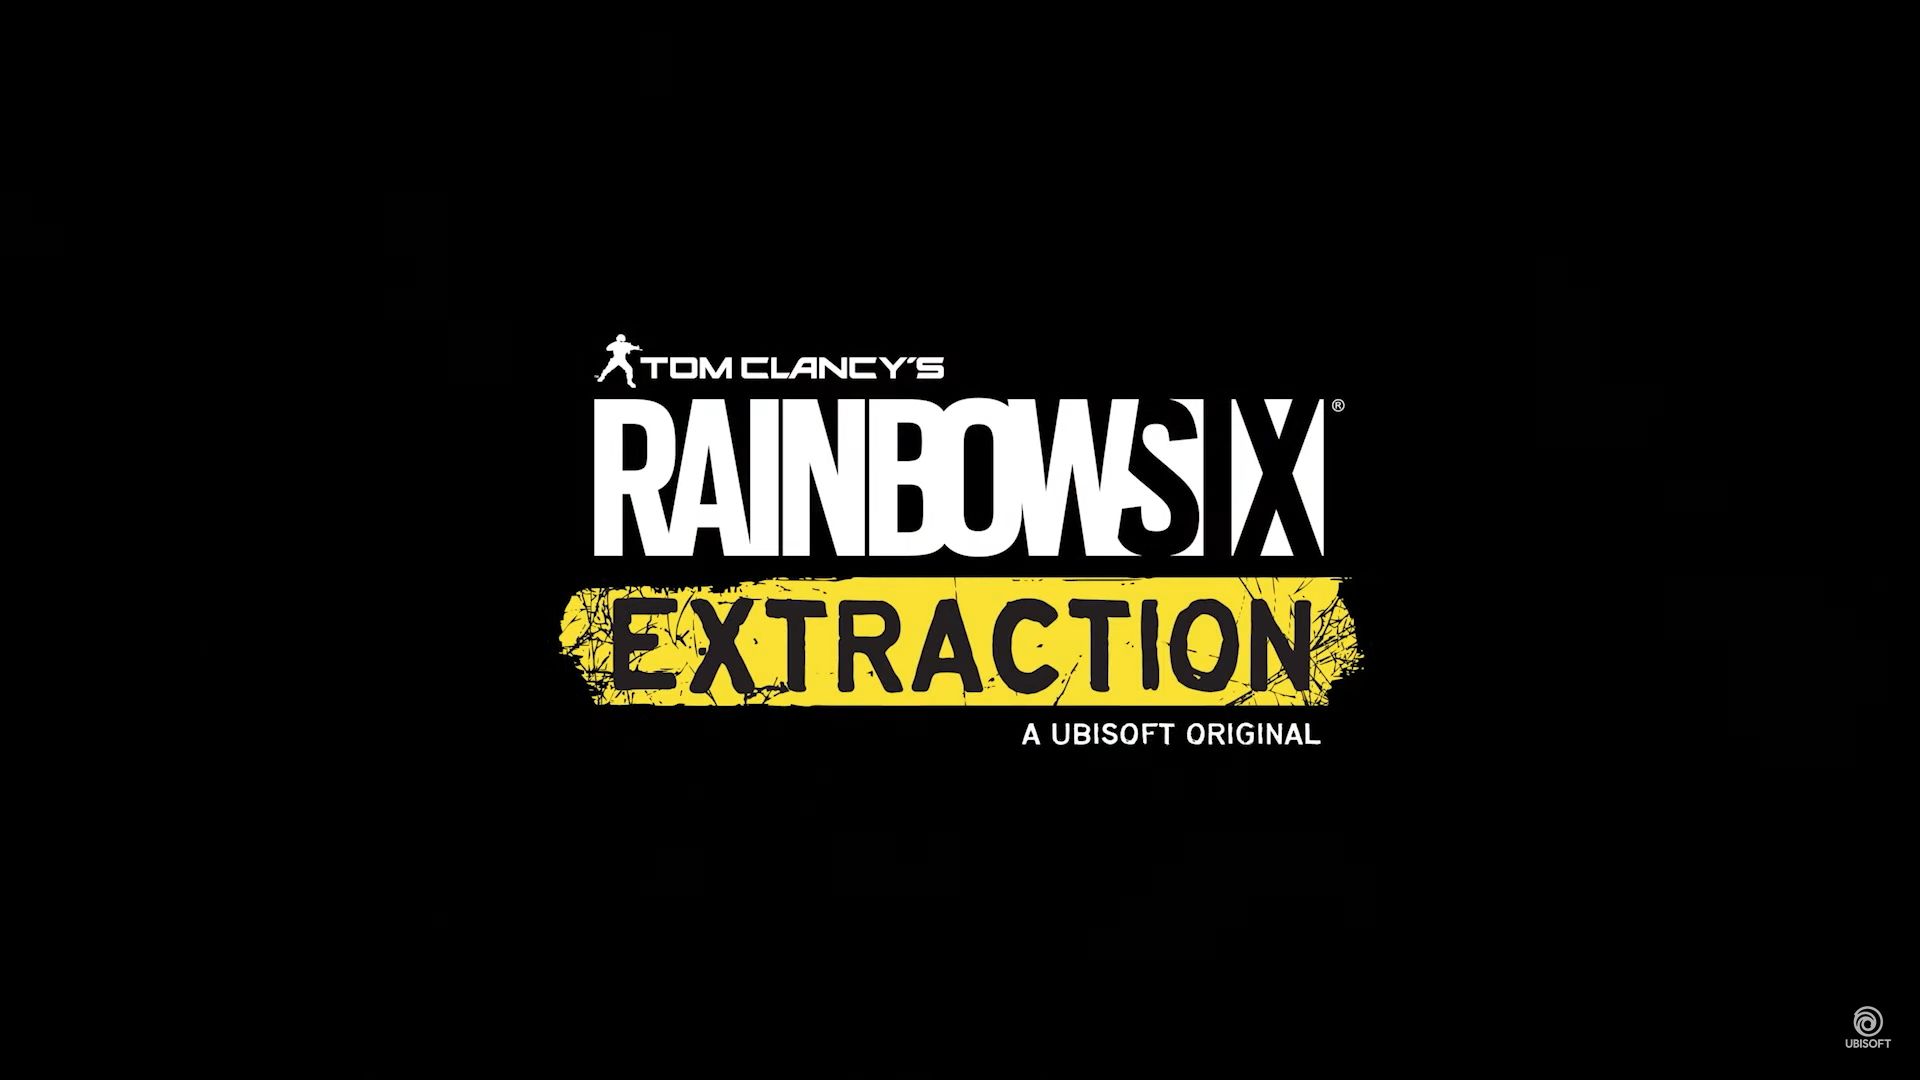 rainbow six extraction forums